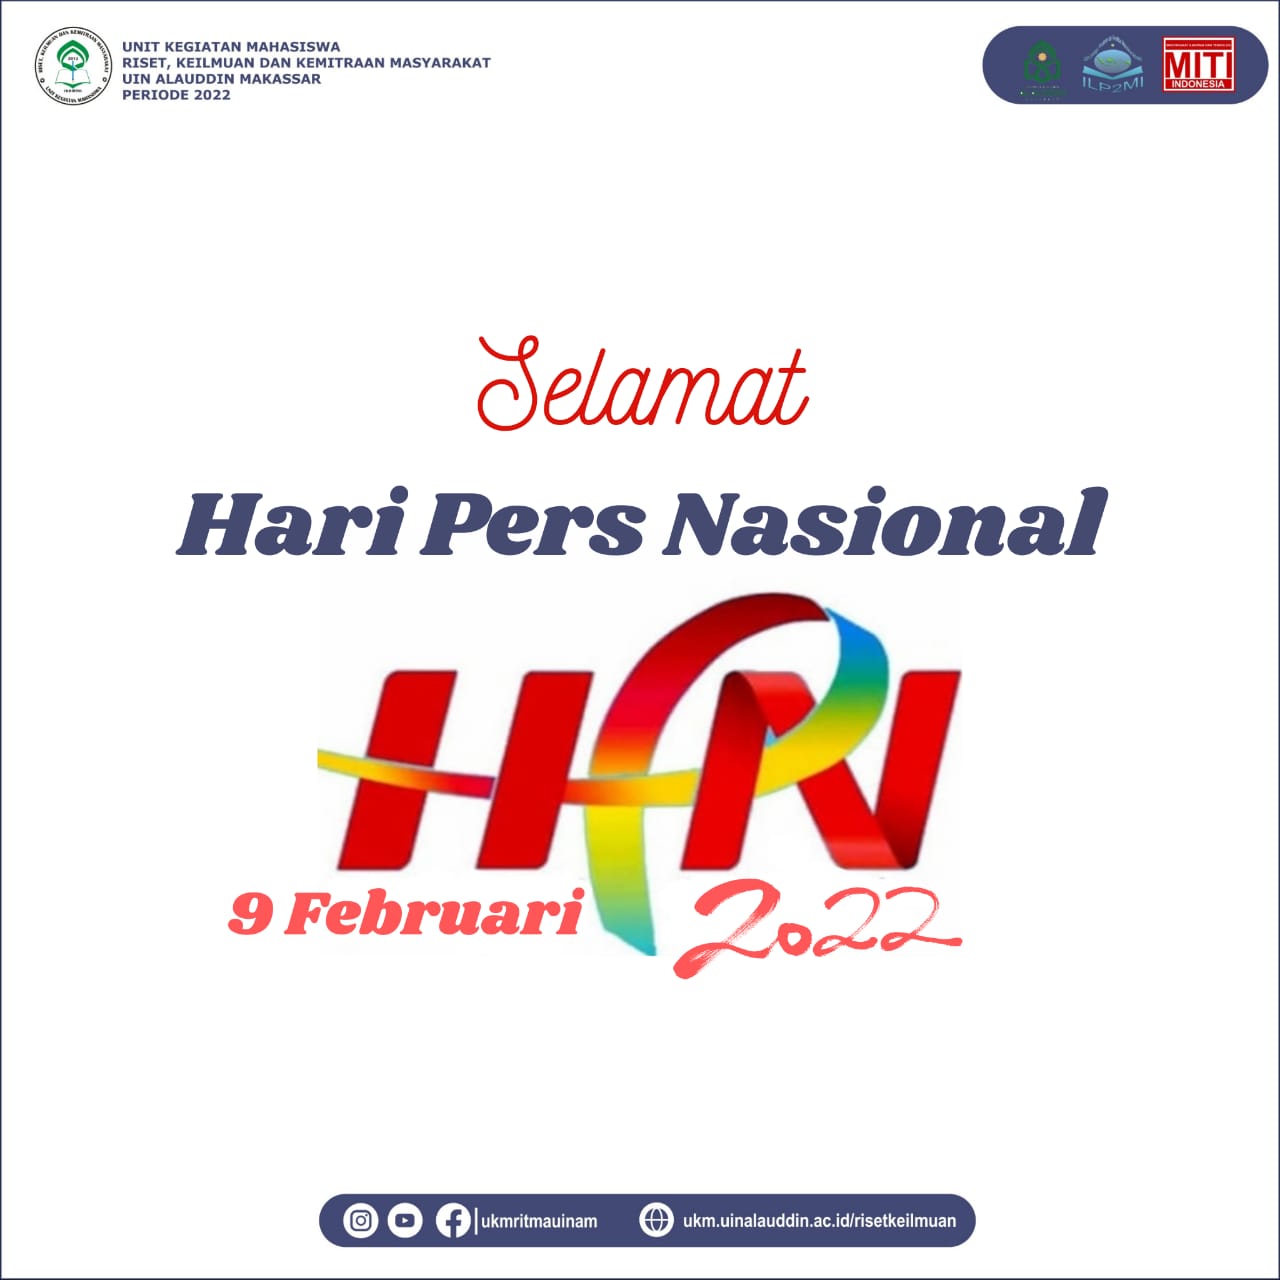 Hari Pers Nasional, 9 Februari 2022 UKM UIN Alauddin Makassar